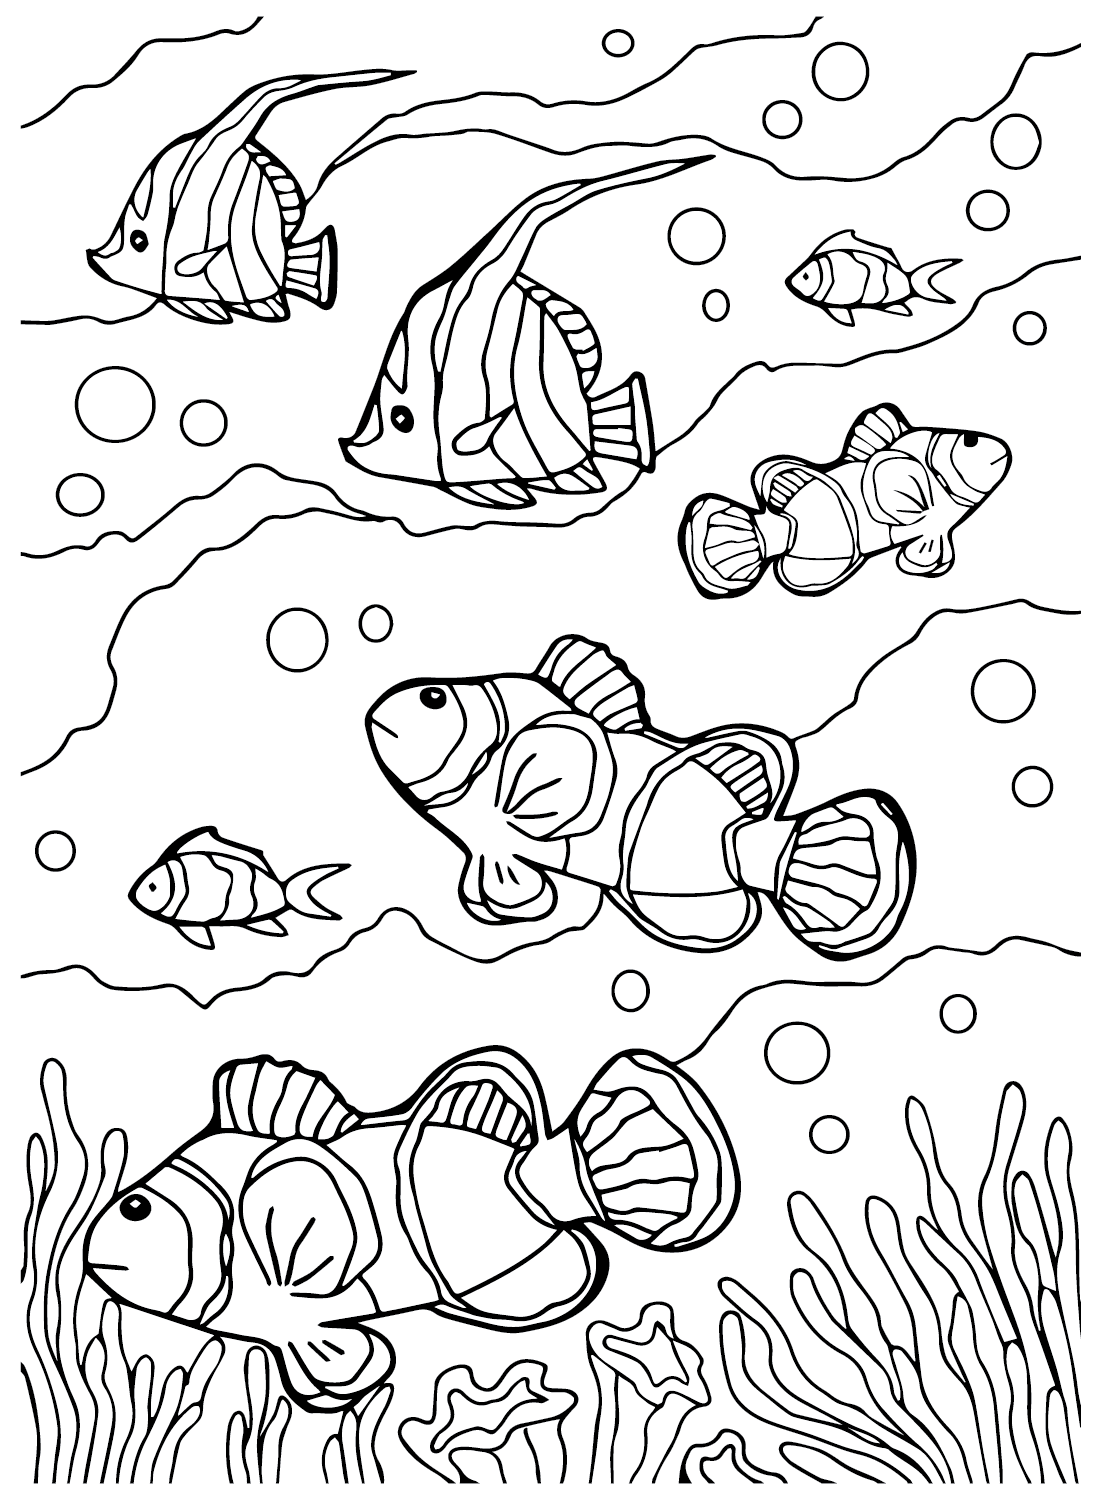 Pennant Coralfish and Clownfish Coloring Page